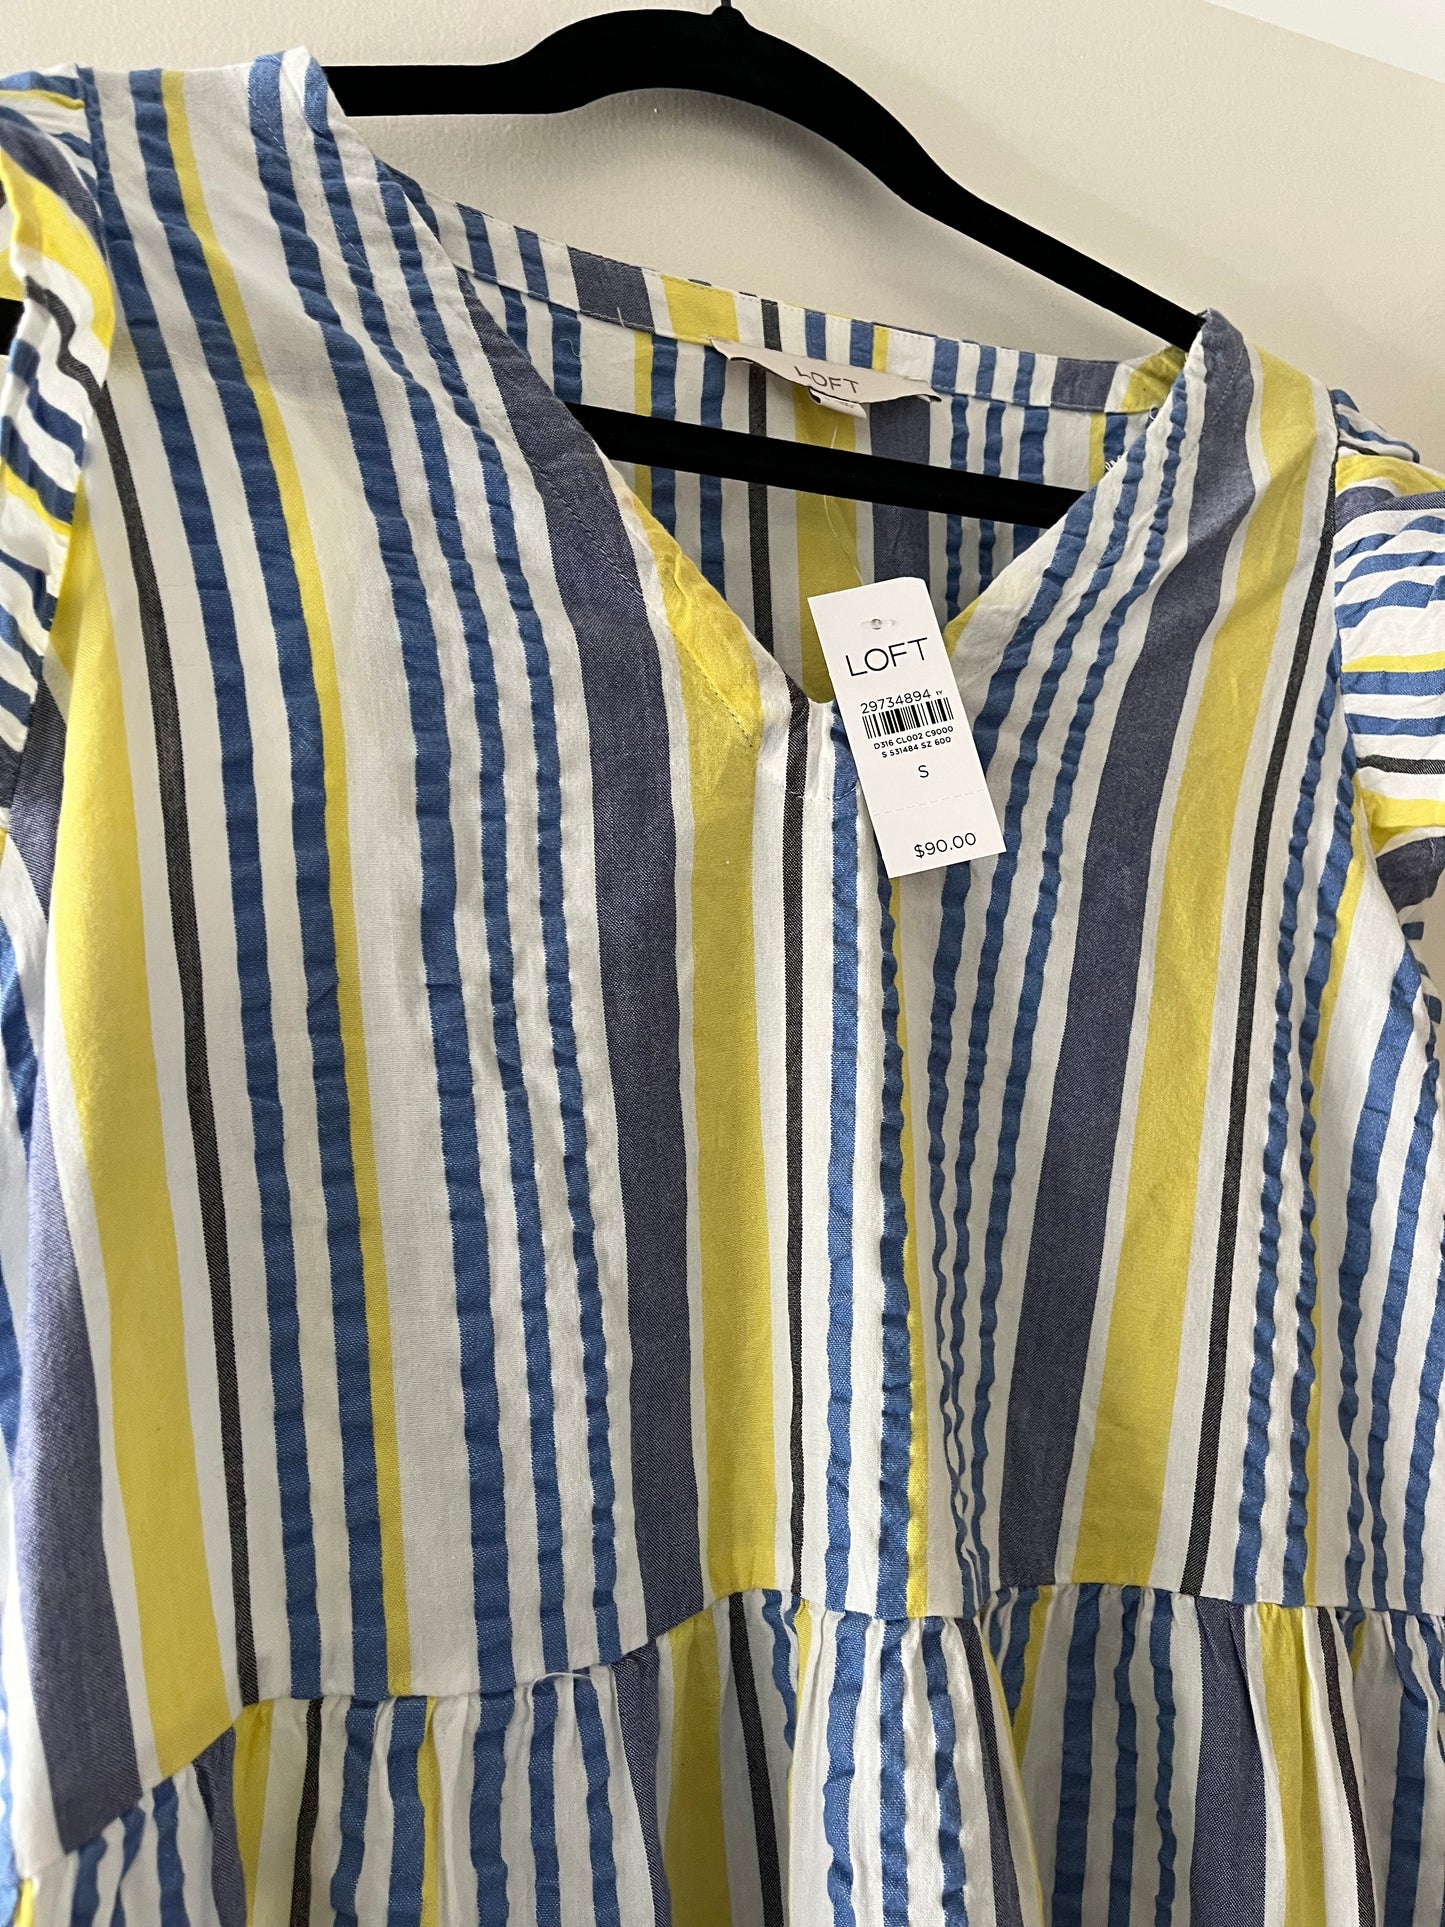 NWT Loft blue and yellow striped dress (45244)